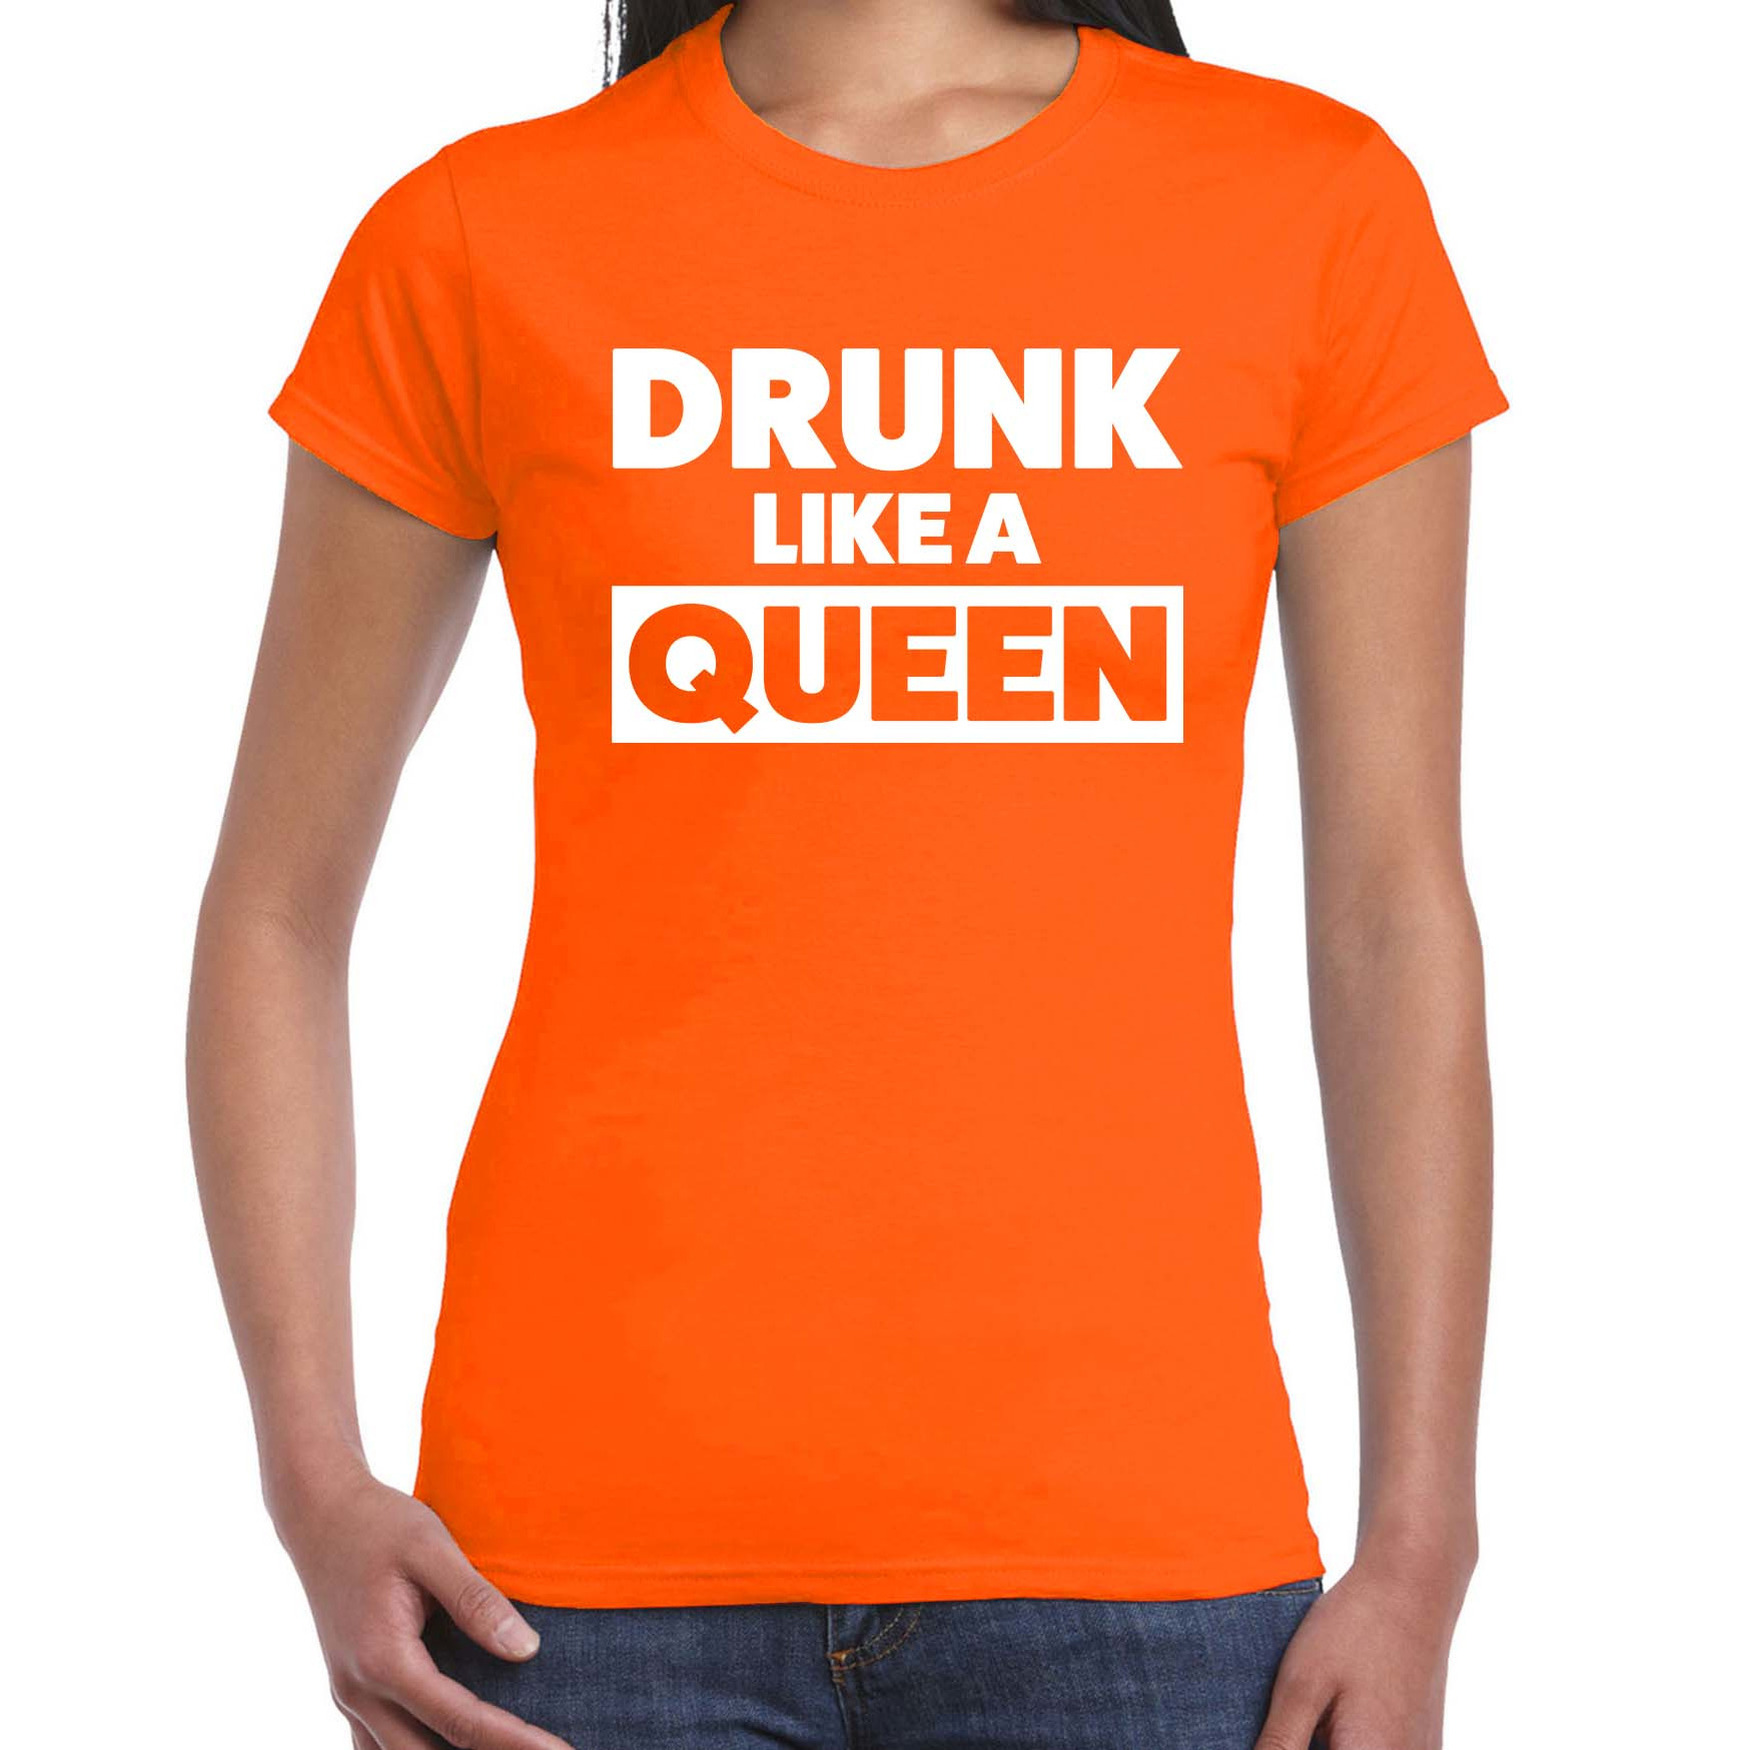 Drunk like a Queen t-shirt oranje voor dames - Koningsdag shirts